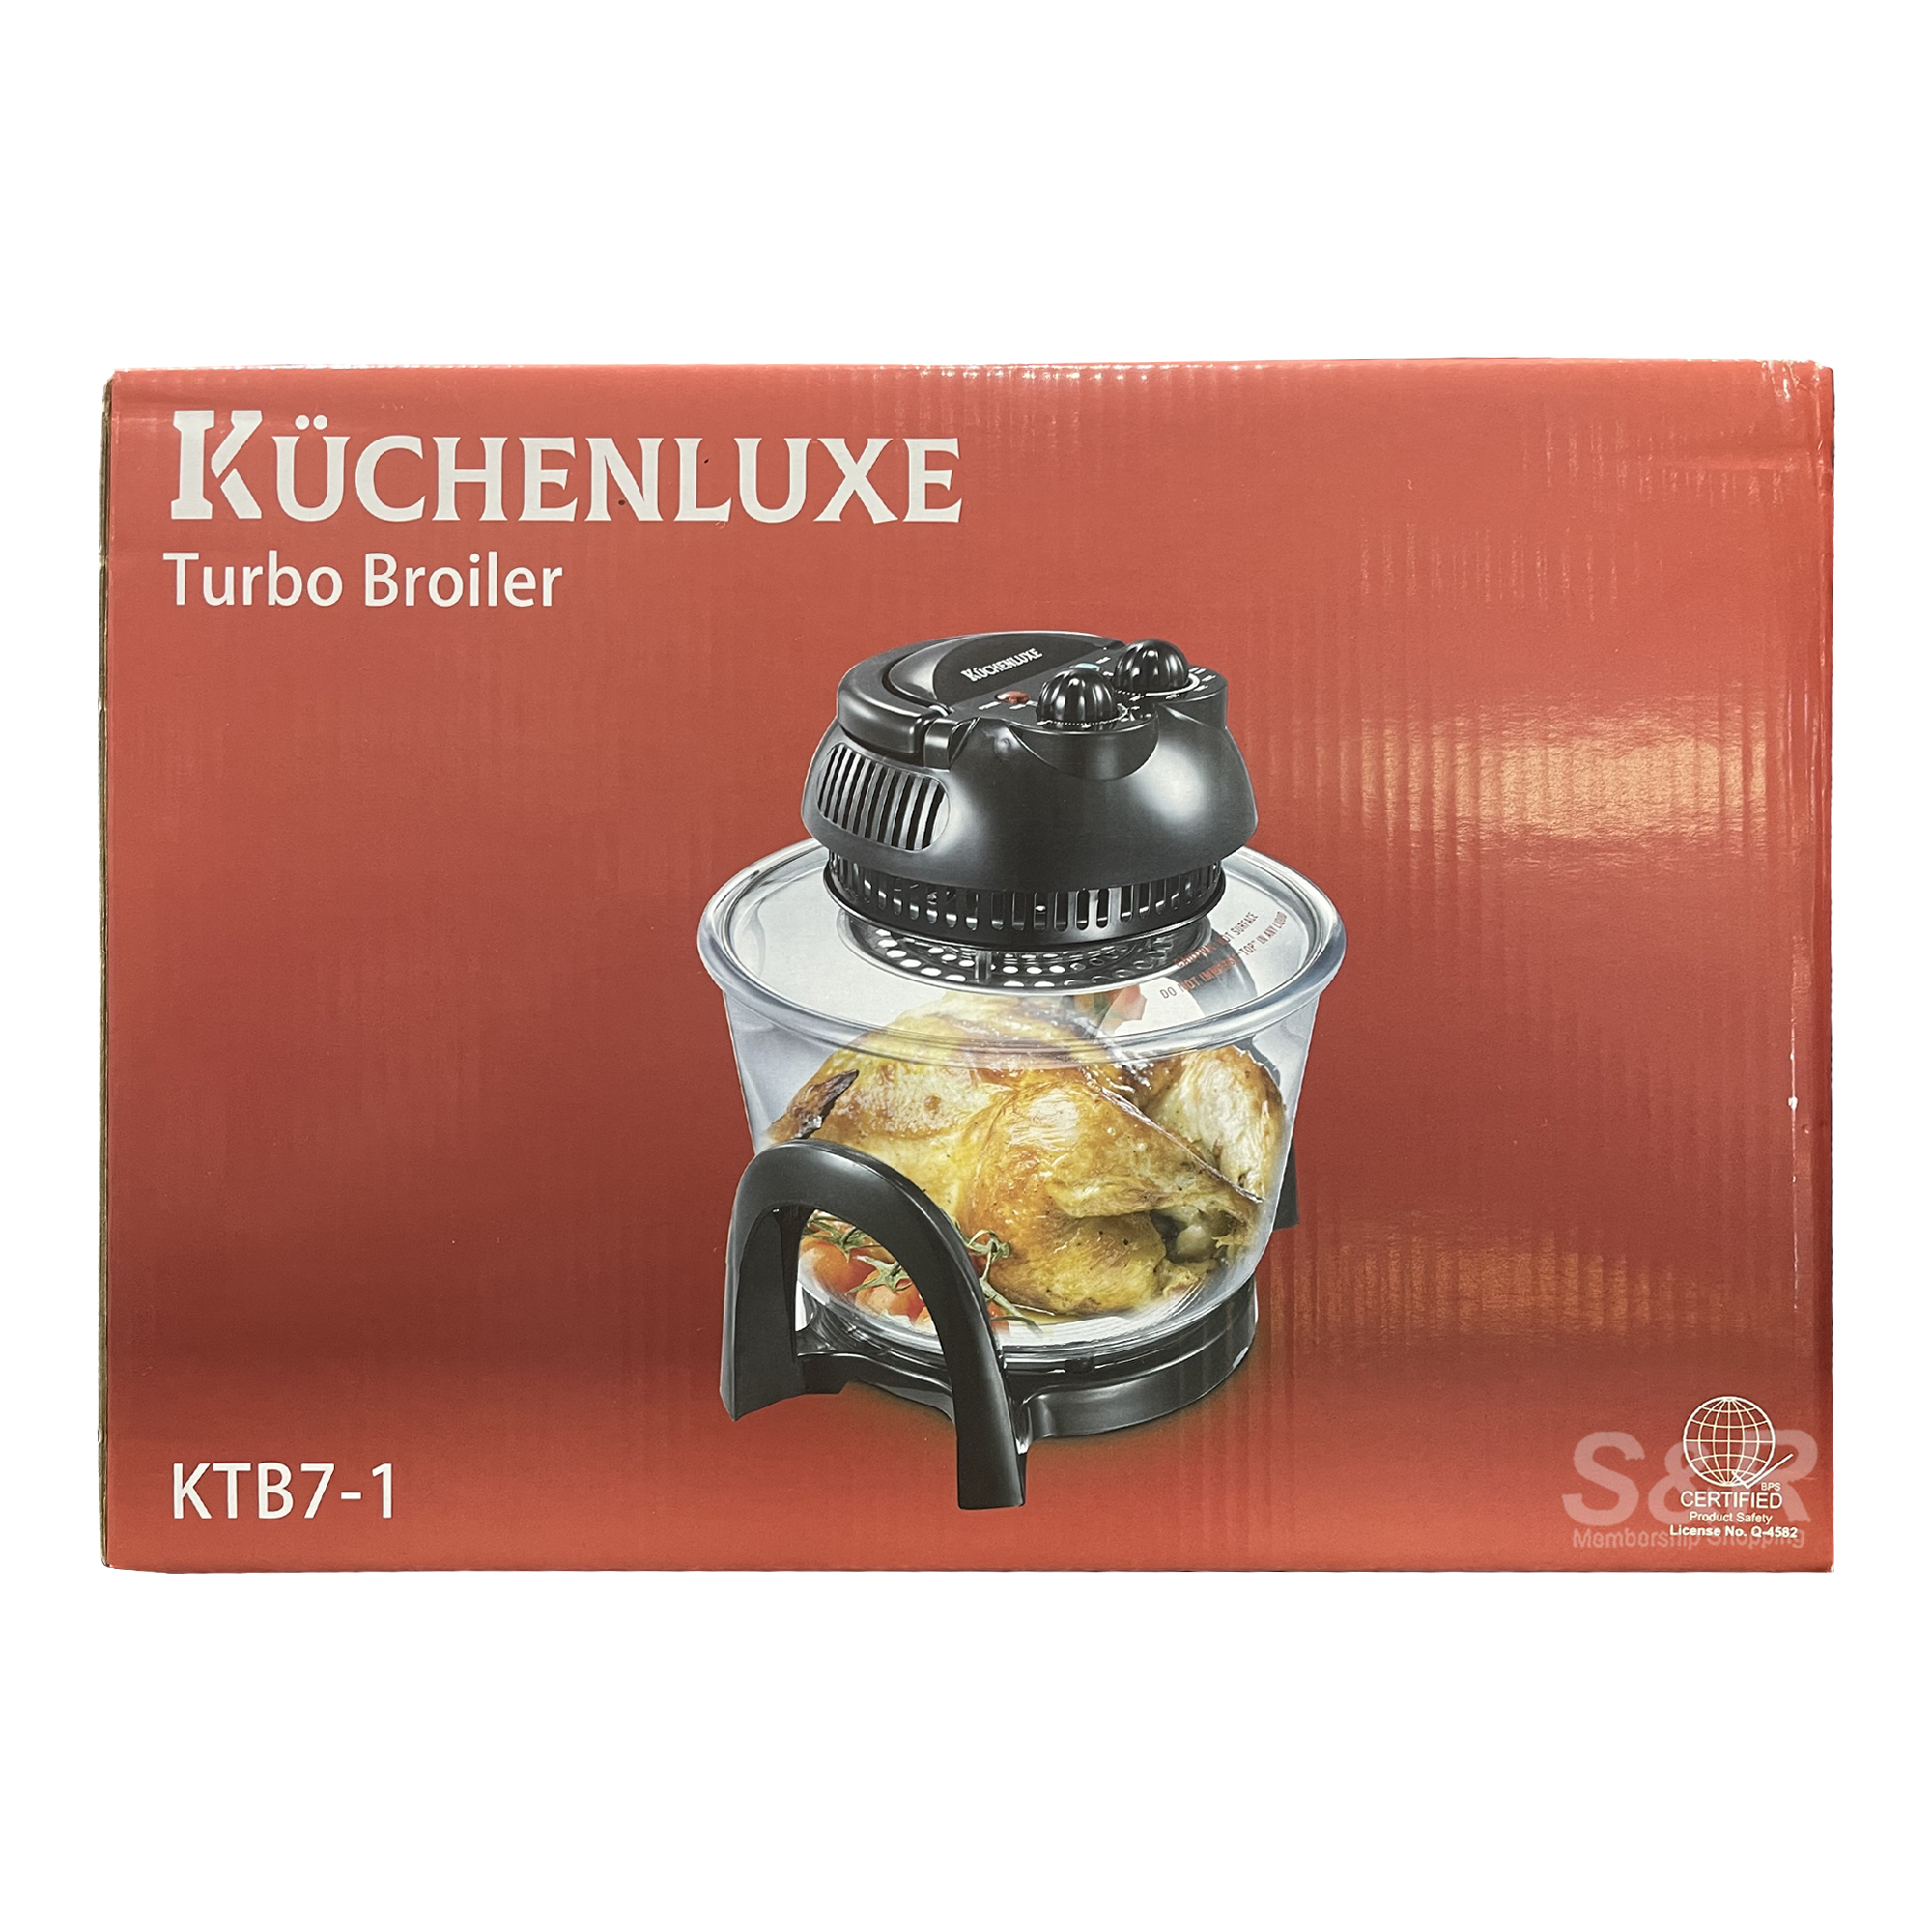 Kuchenluxe Turbo Broiler KTB7-1 1pc